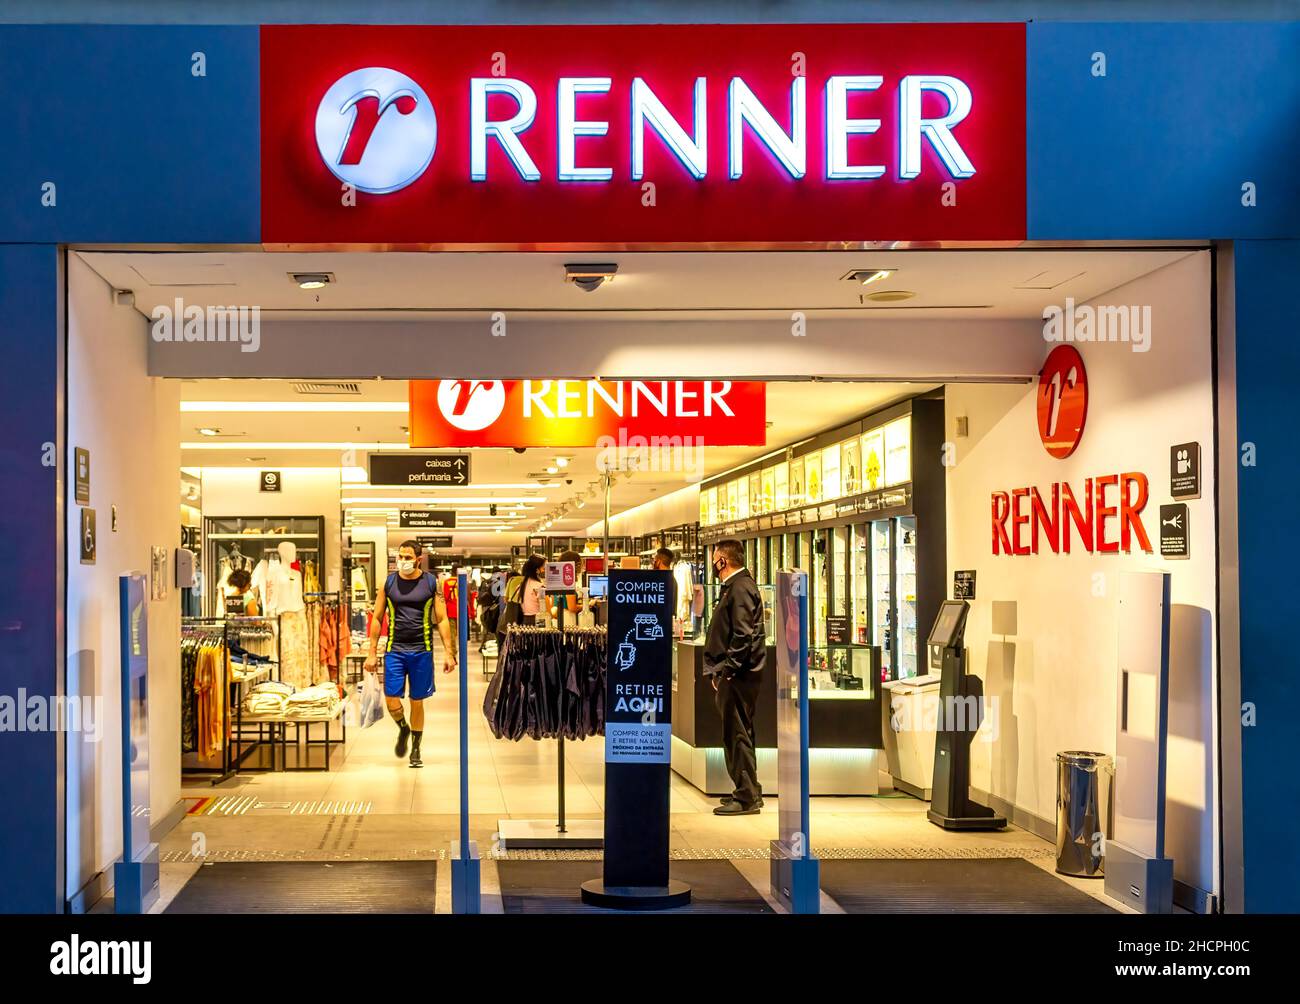 alquitrán ornamento Repegar Lojas renner fotografías e imágenes de alta resolución - Alamy